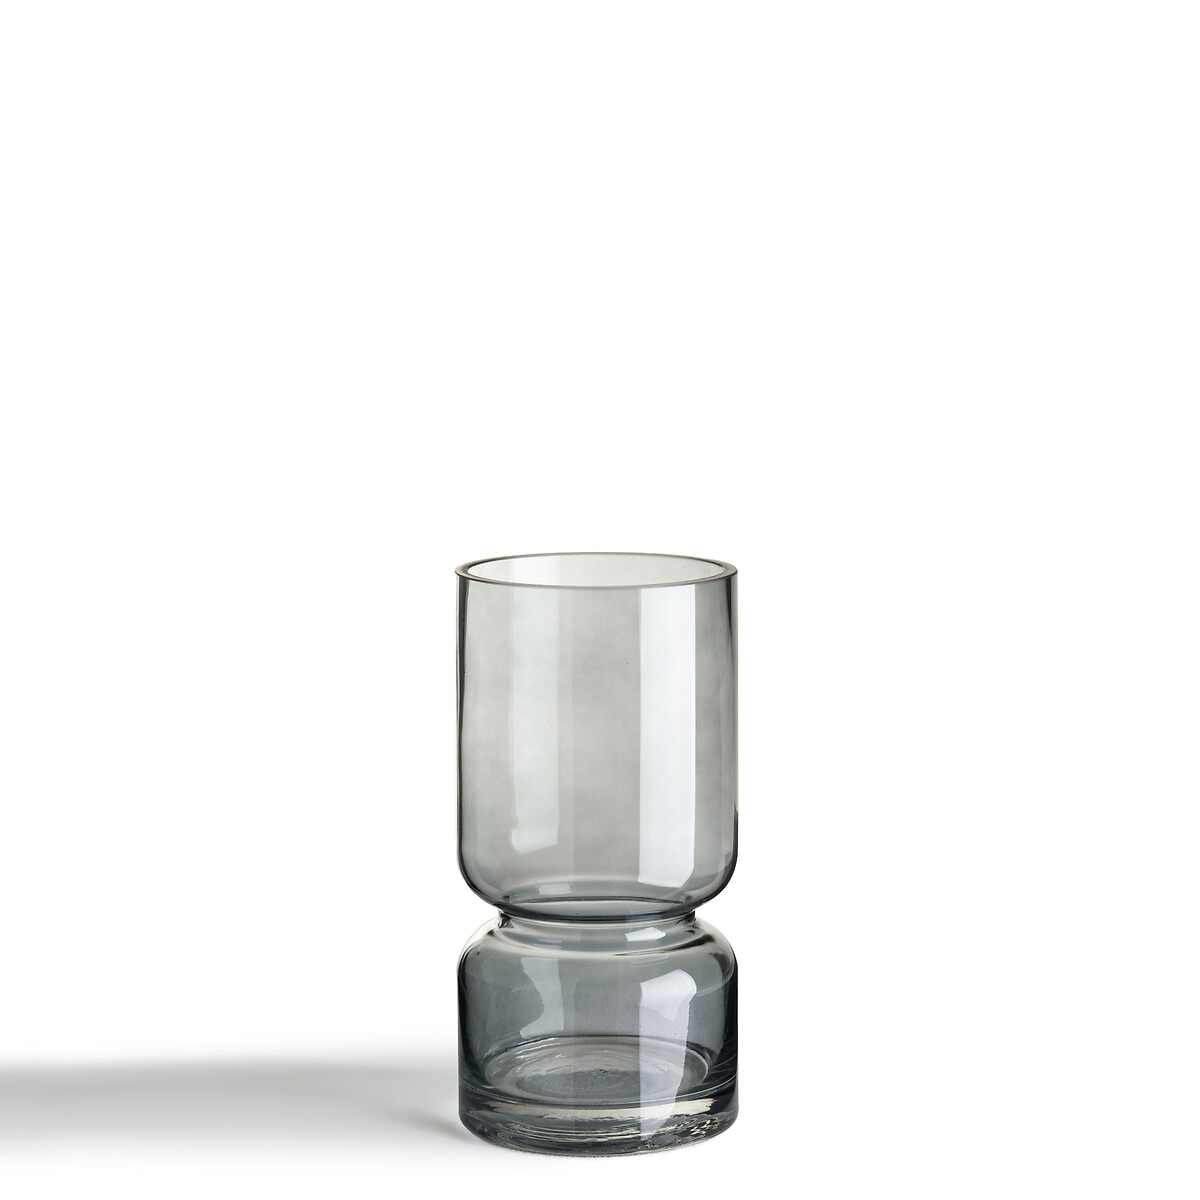 Sinao 22cm High Smoked Glass Vase